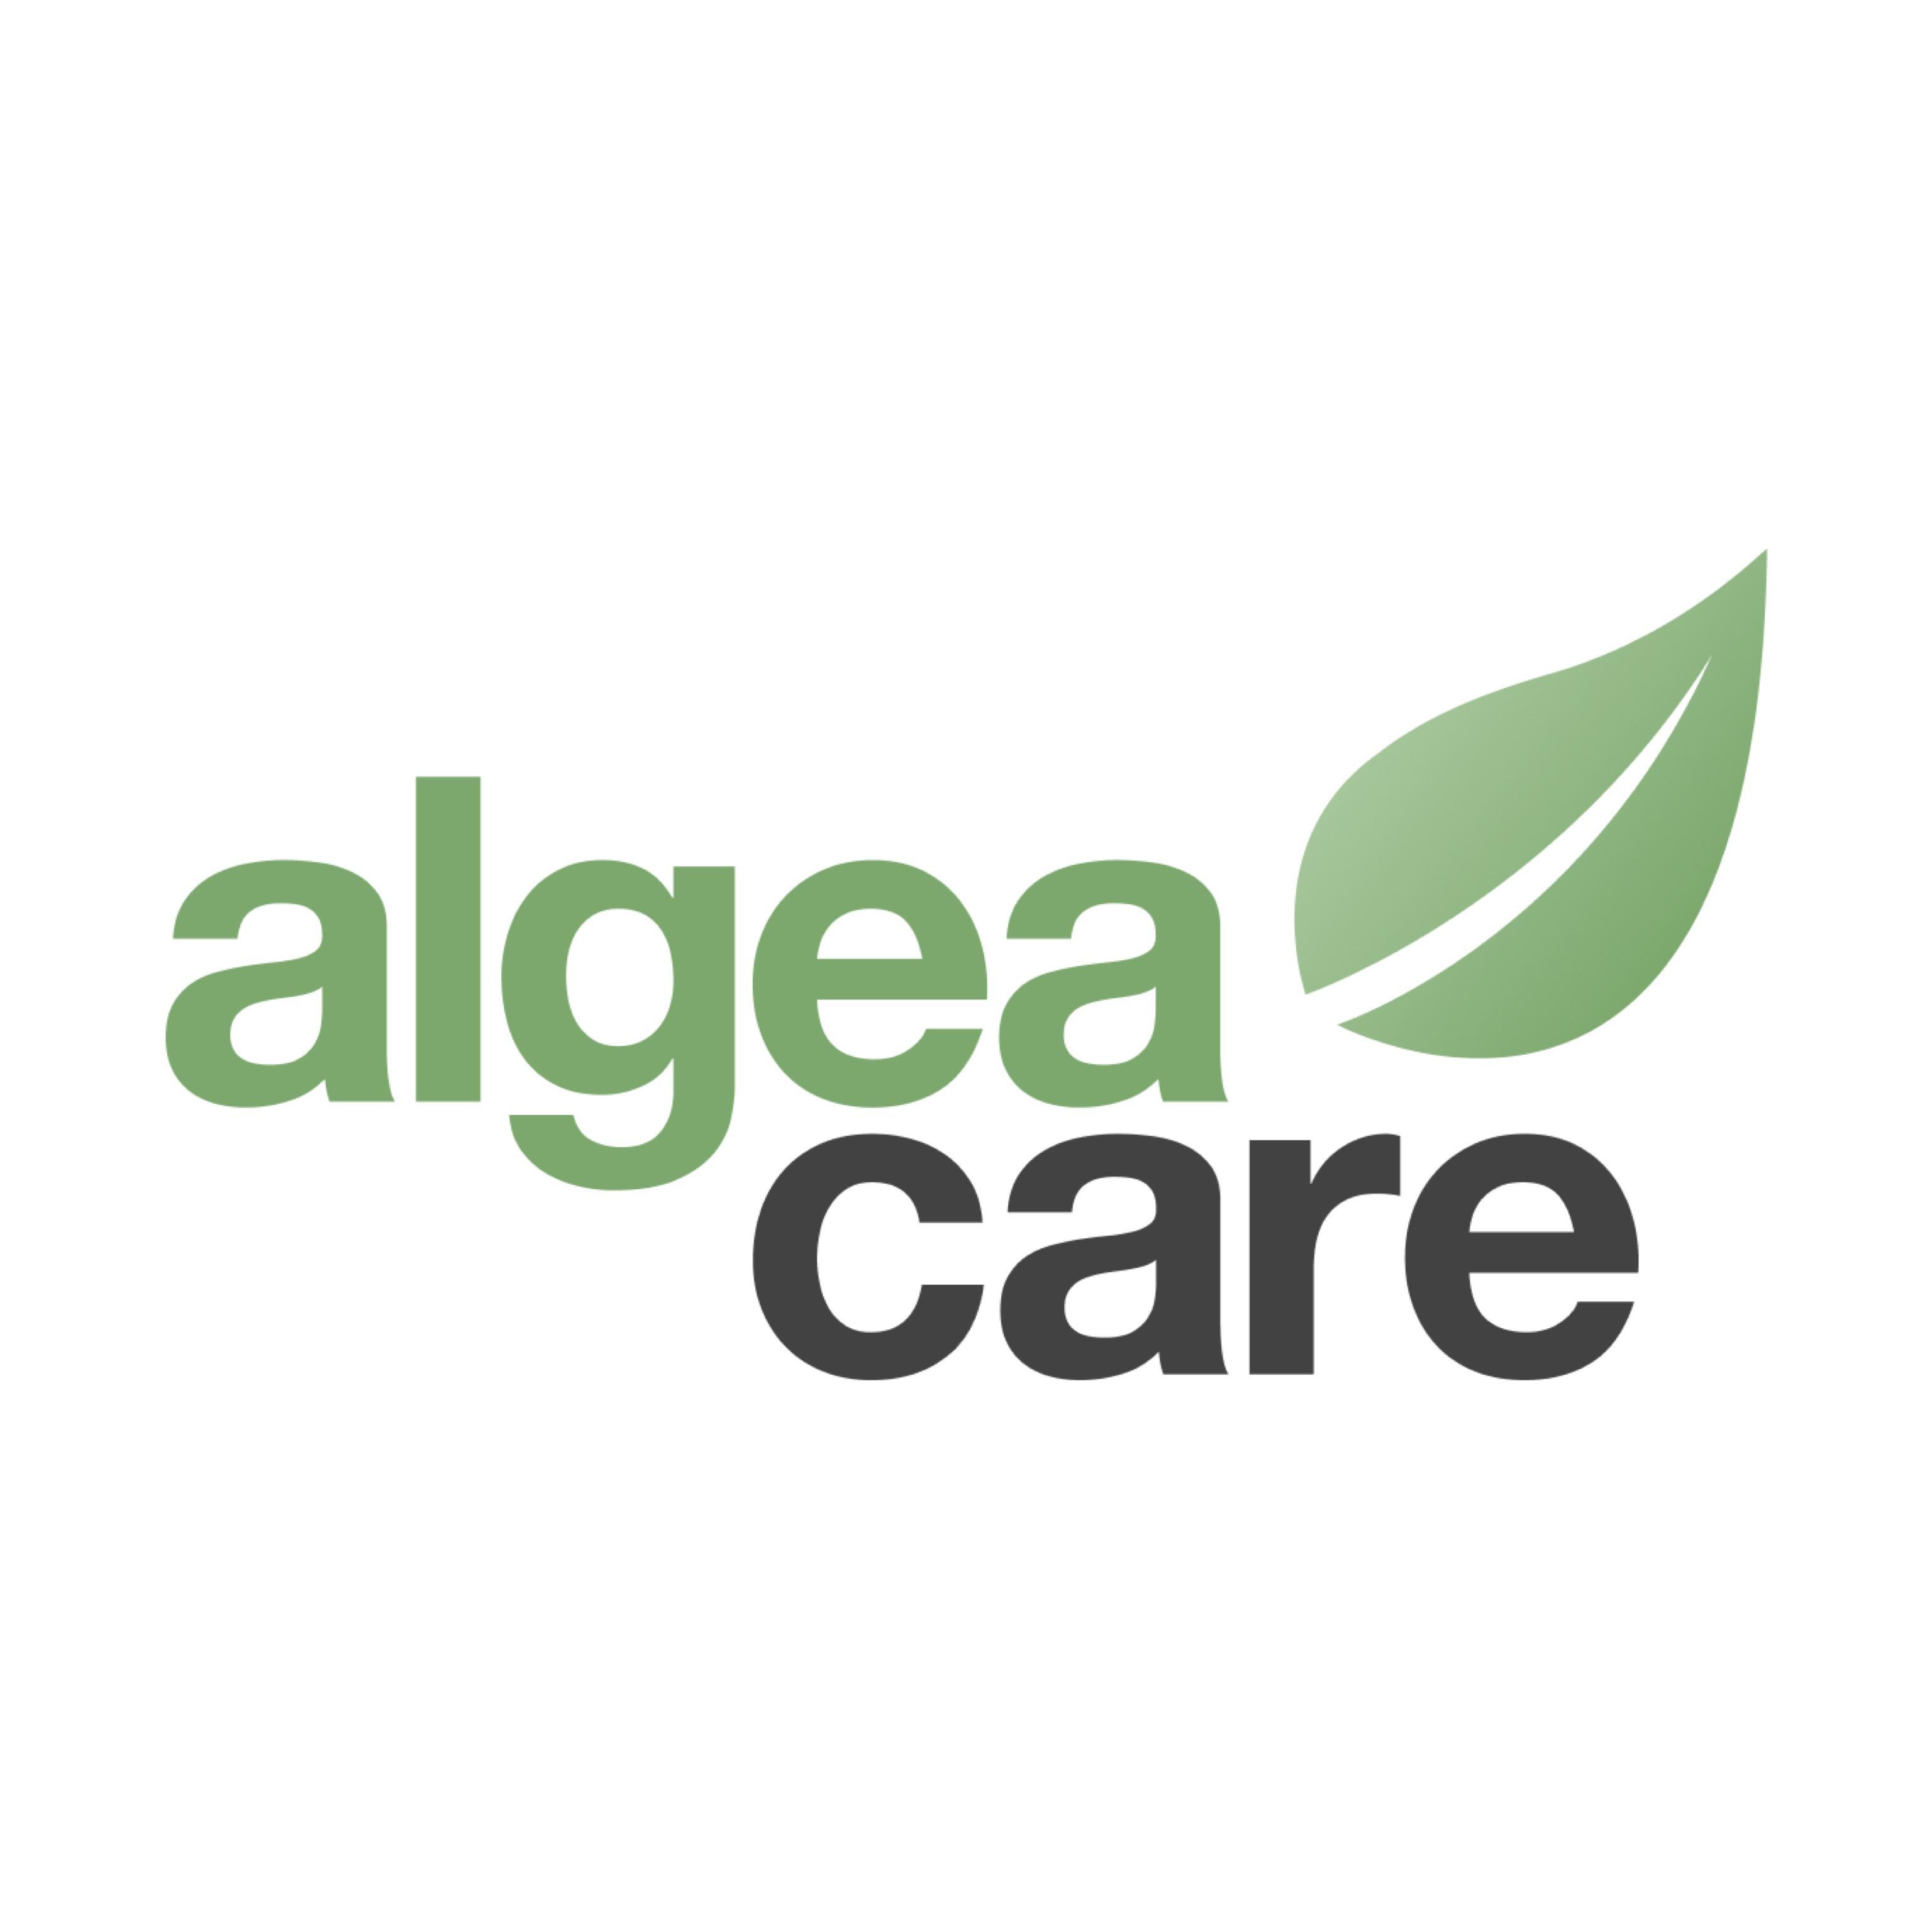 Algea Care Therapiezentrum Stuttgart in Stuttgart - Logo